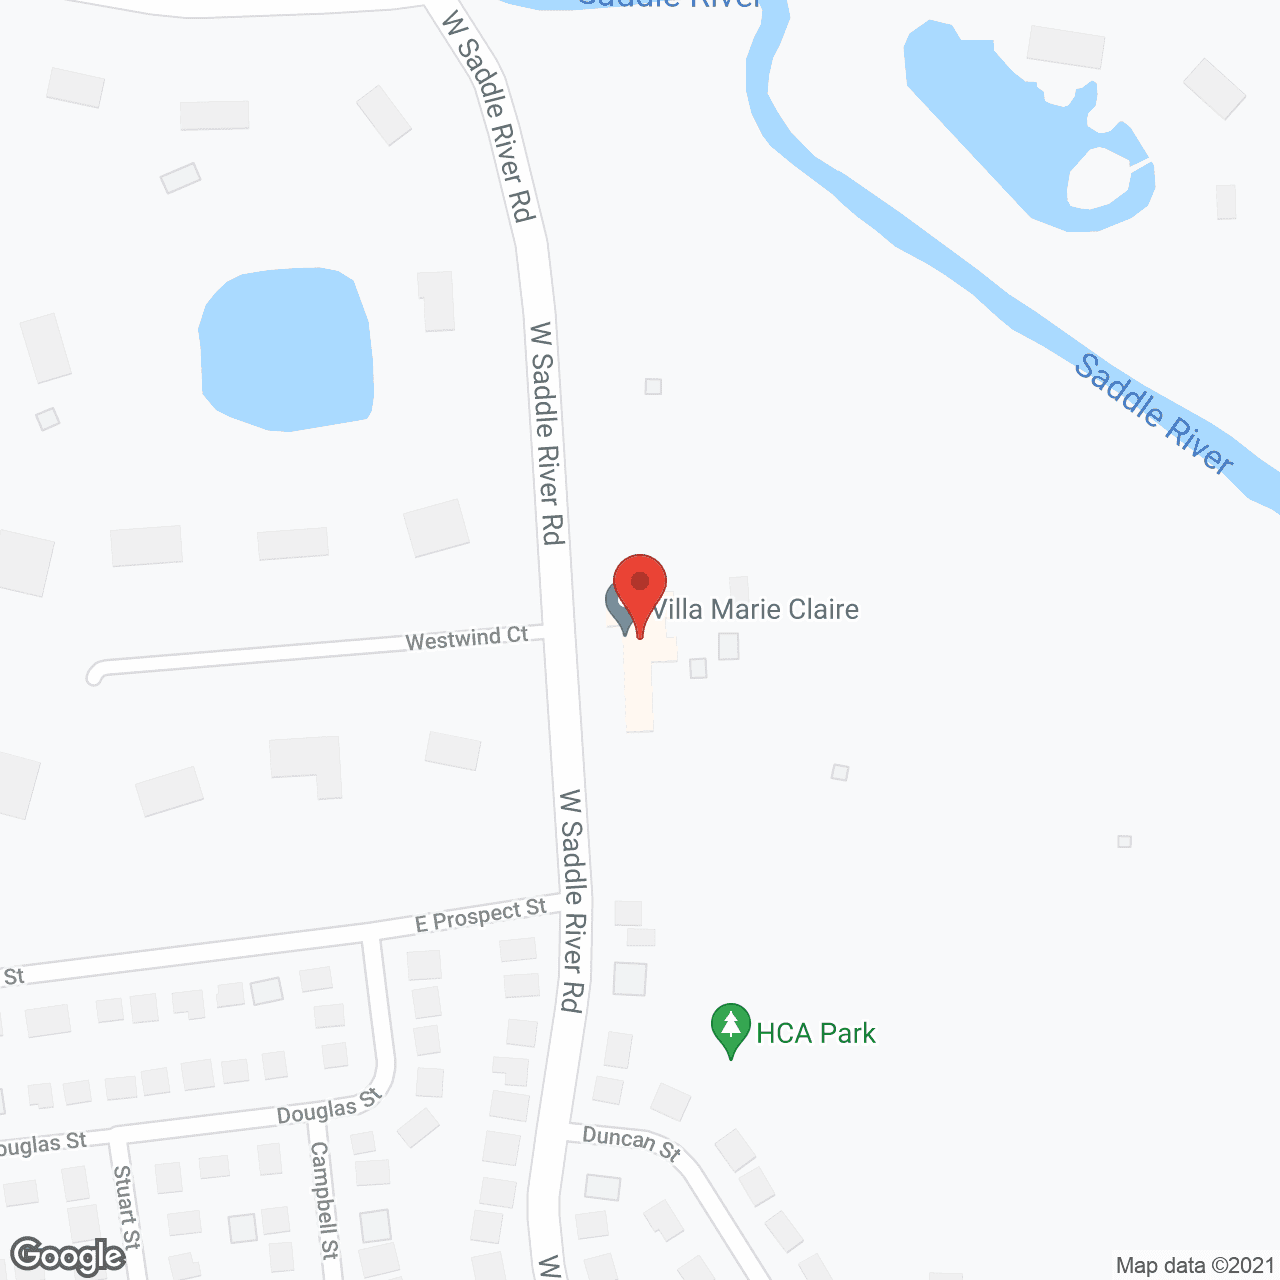 Villa Marie Claire in google map